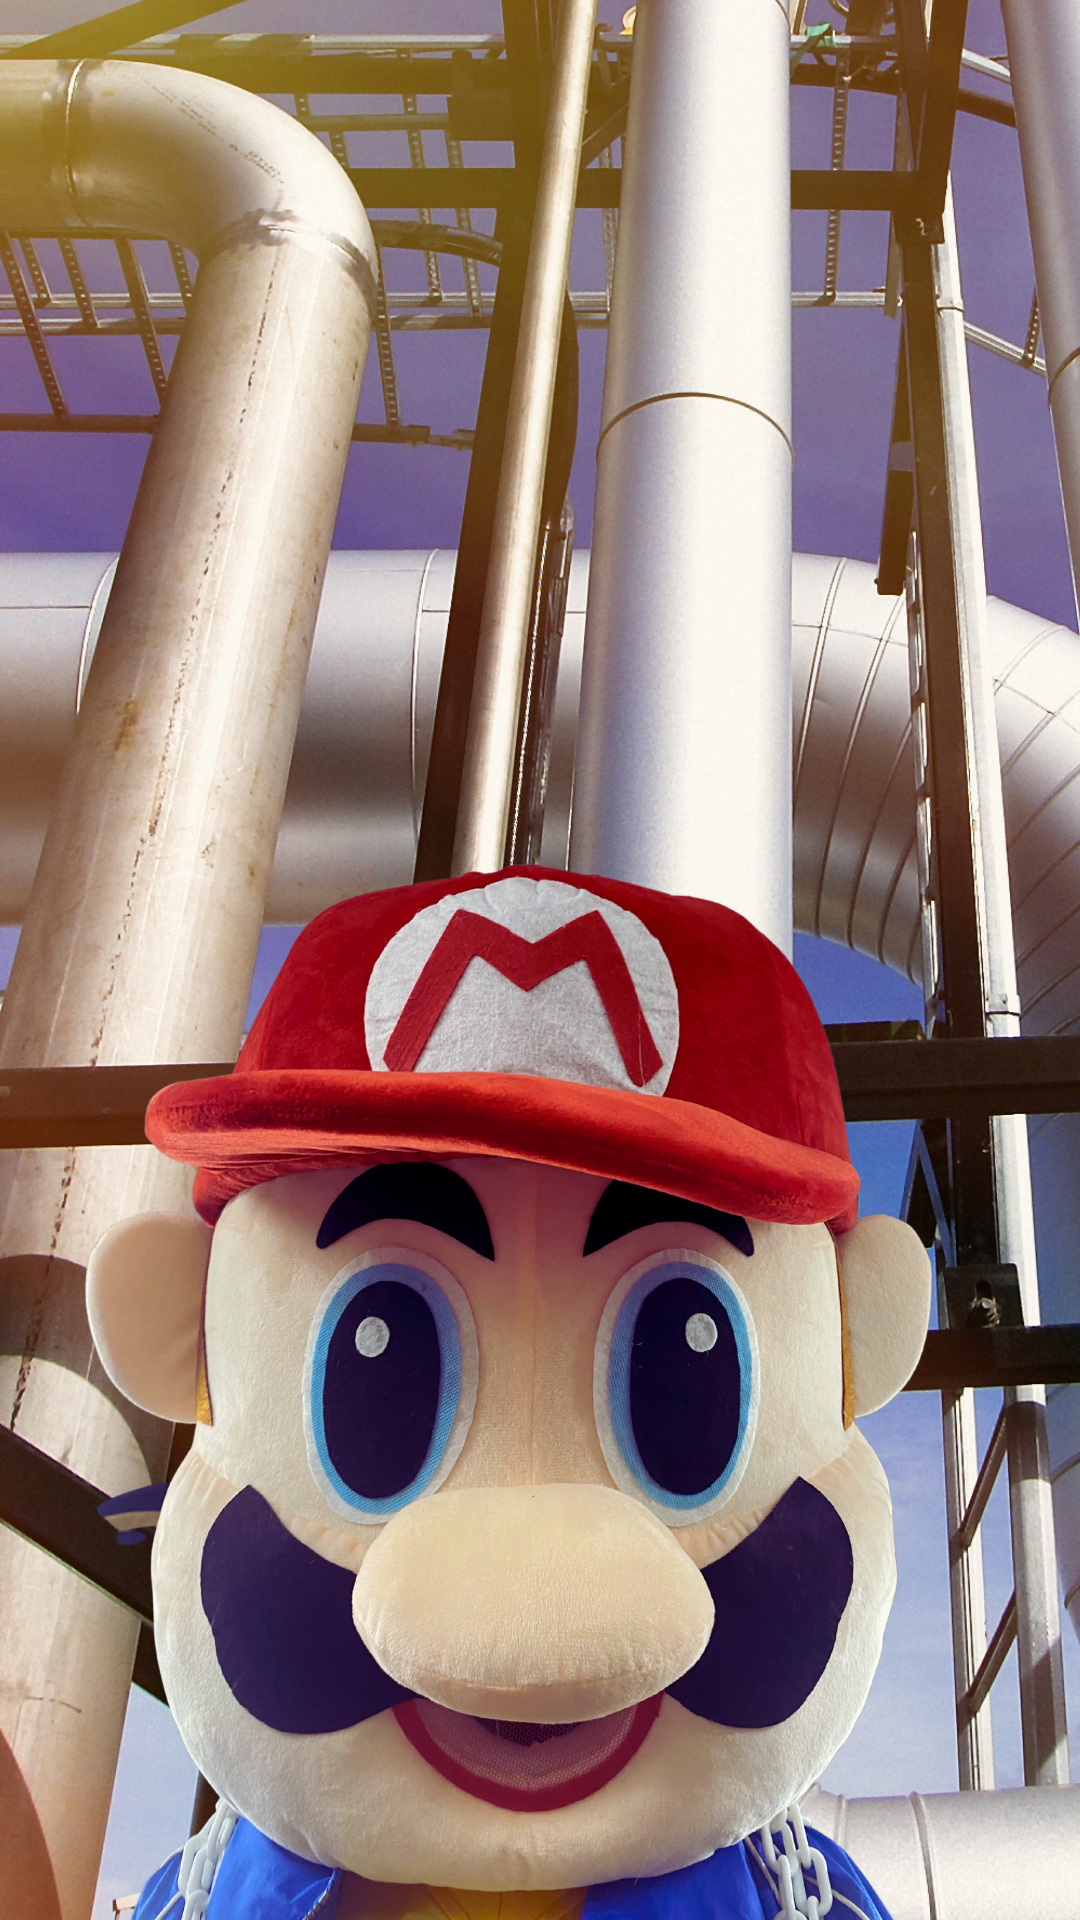 Featured image for “Mario Bros Mascot”